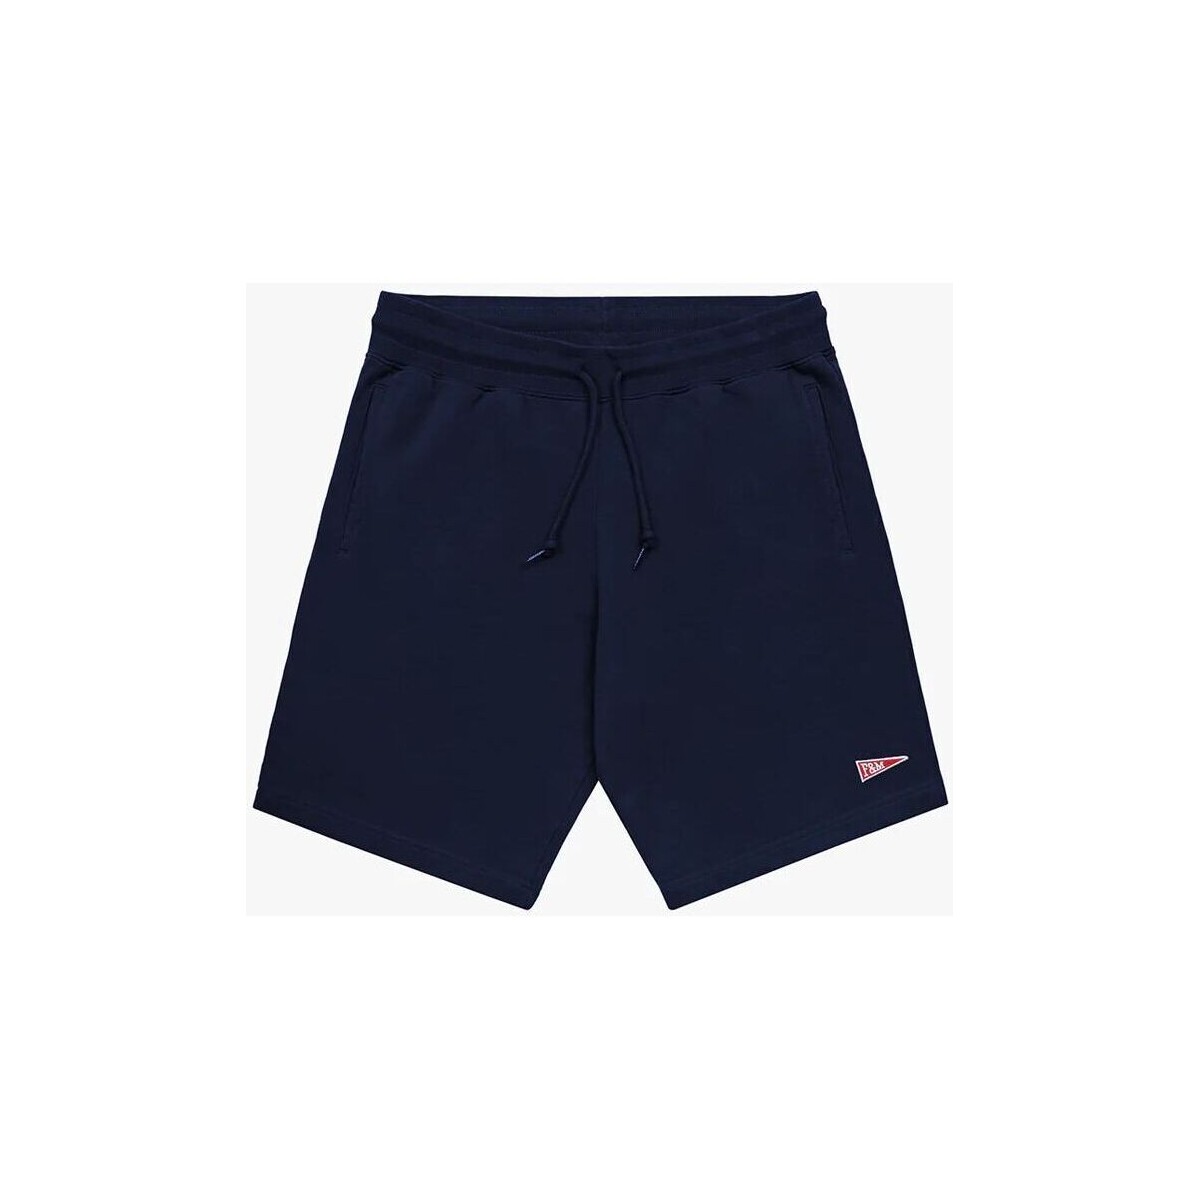 Textil Shorts / Bermudas Franklin & Marshall JM4028.2000P01-219 NAVY Azul